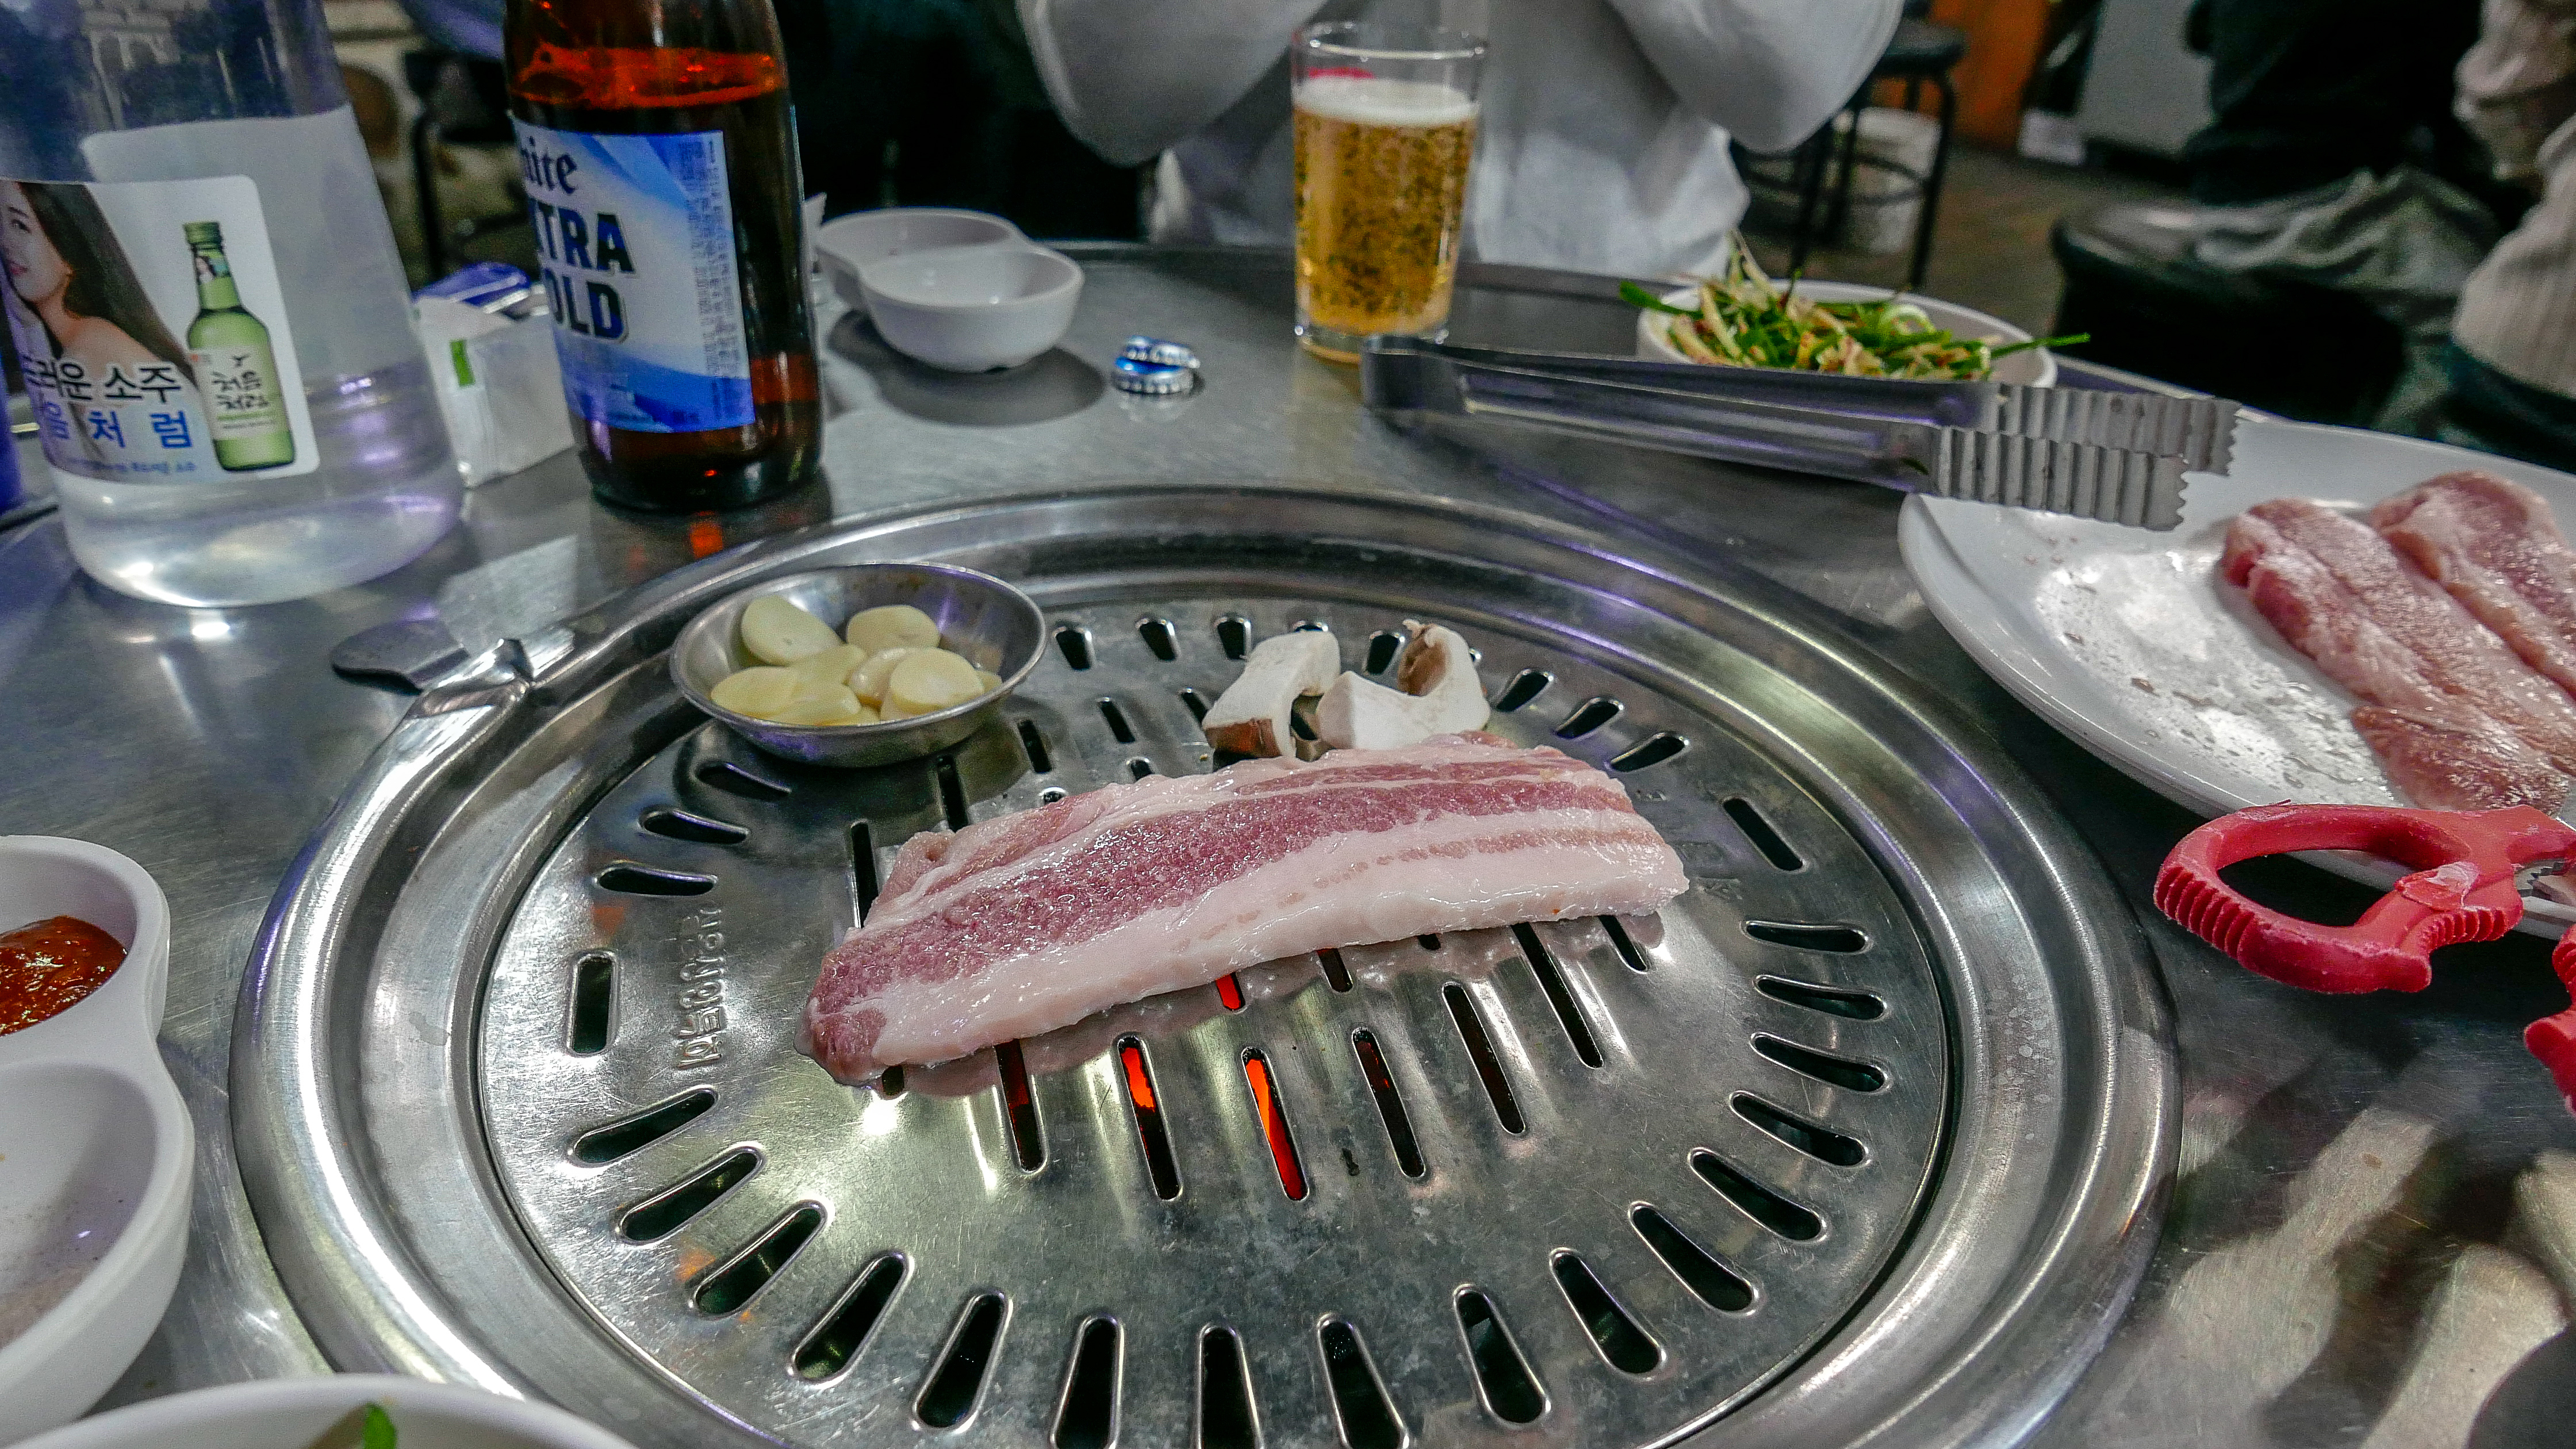 Seoul Korean BBQ